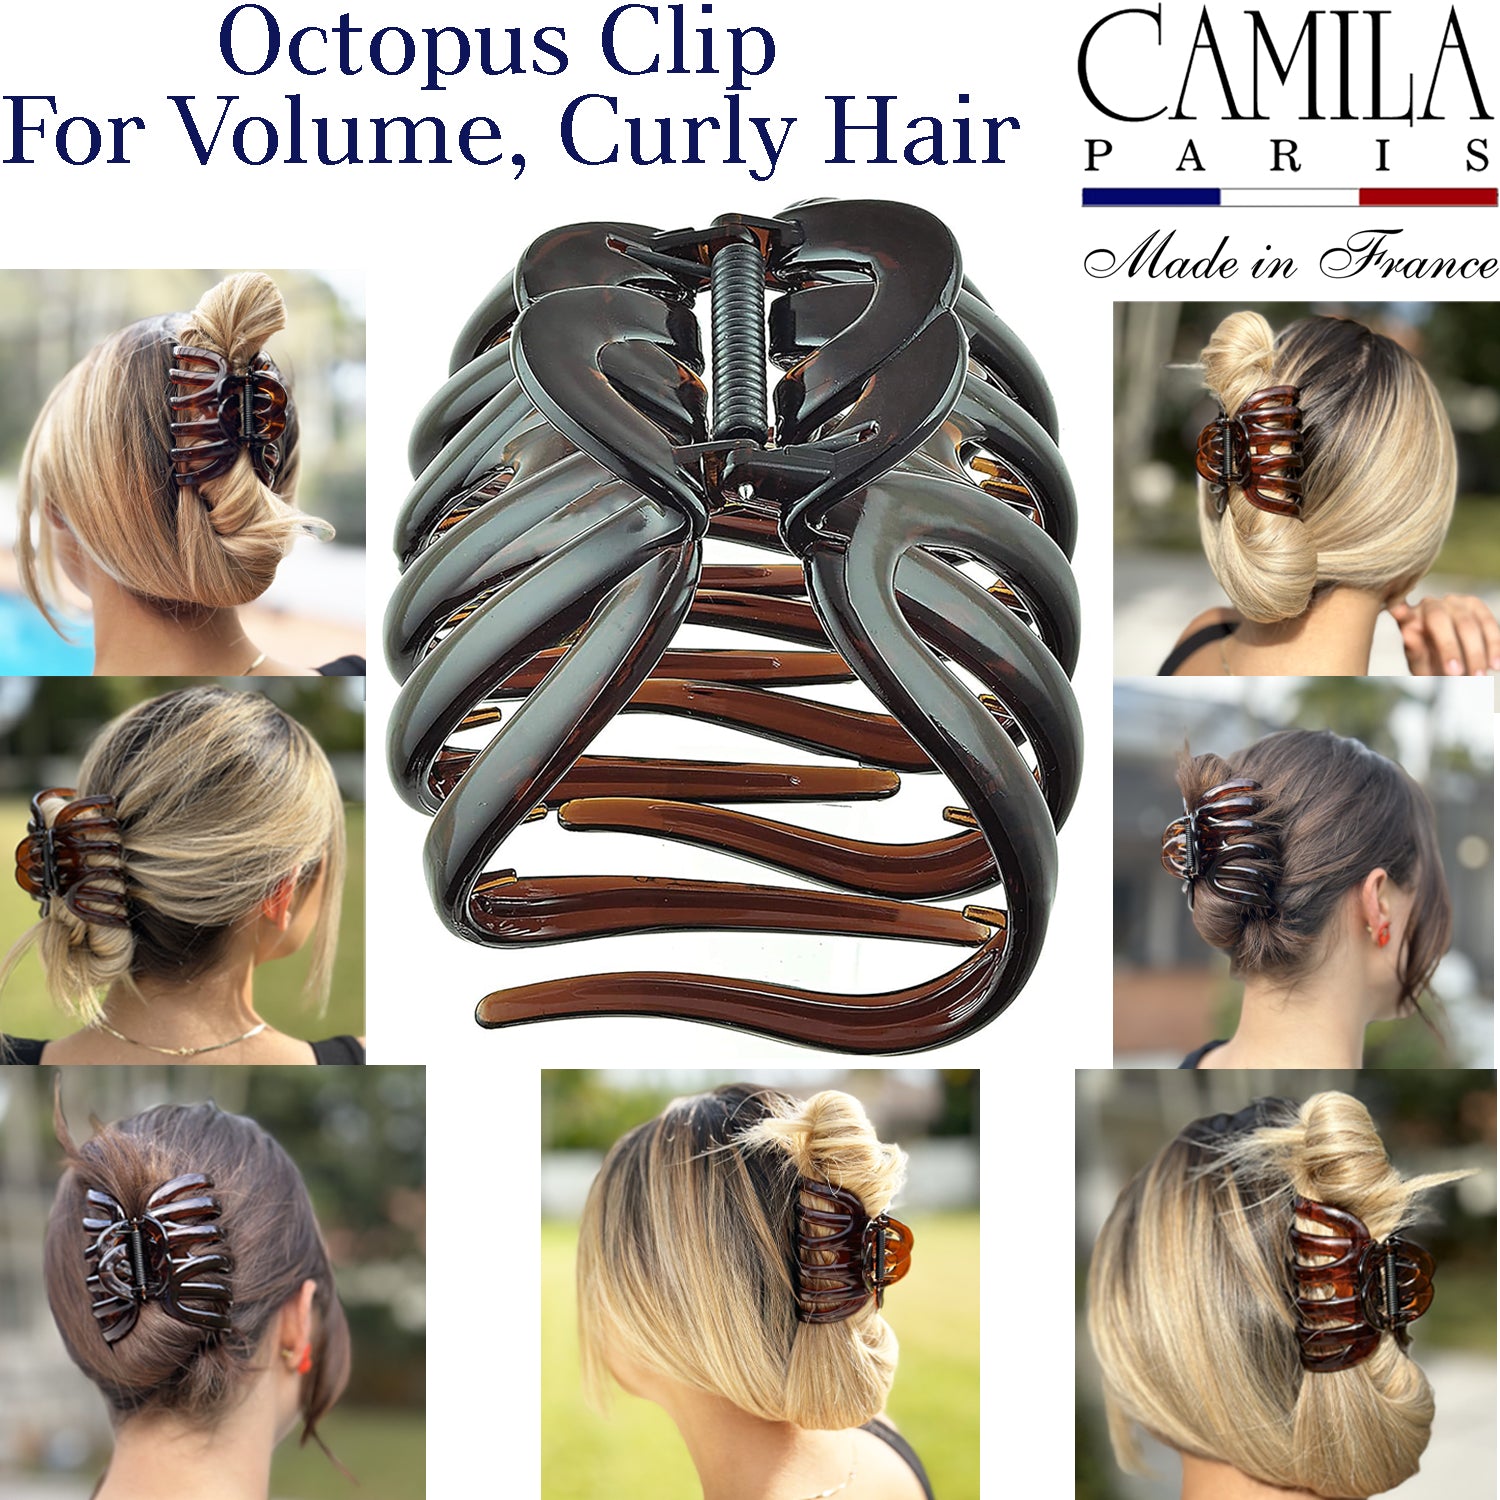 Camila Paris Octopus Hair Clips Unity